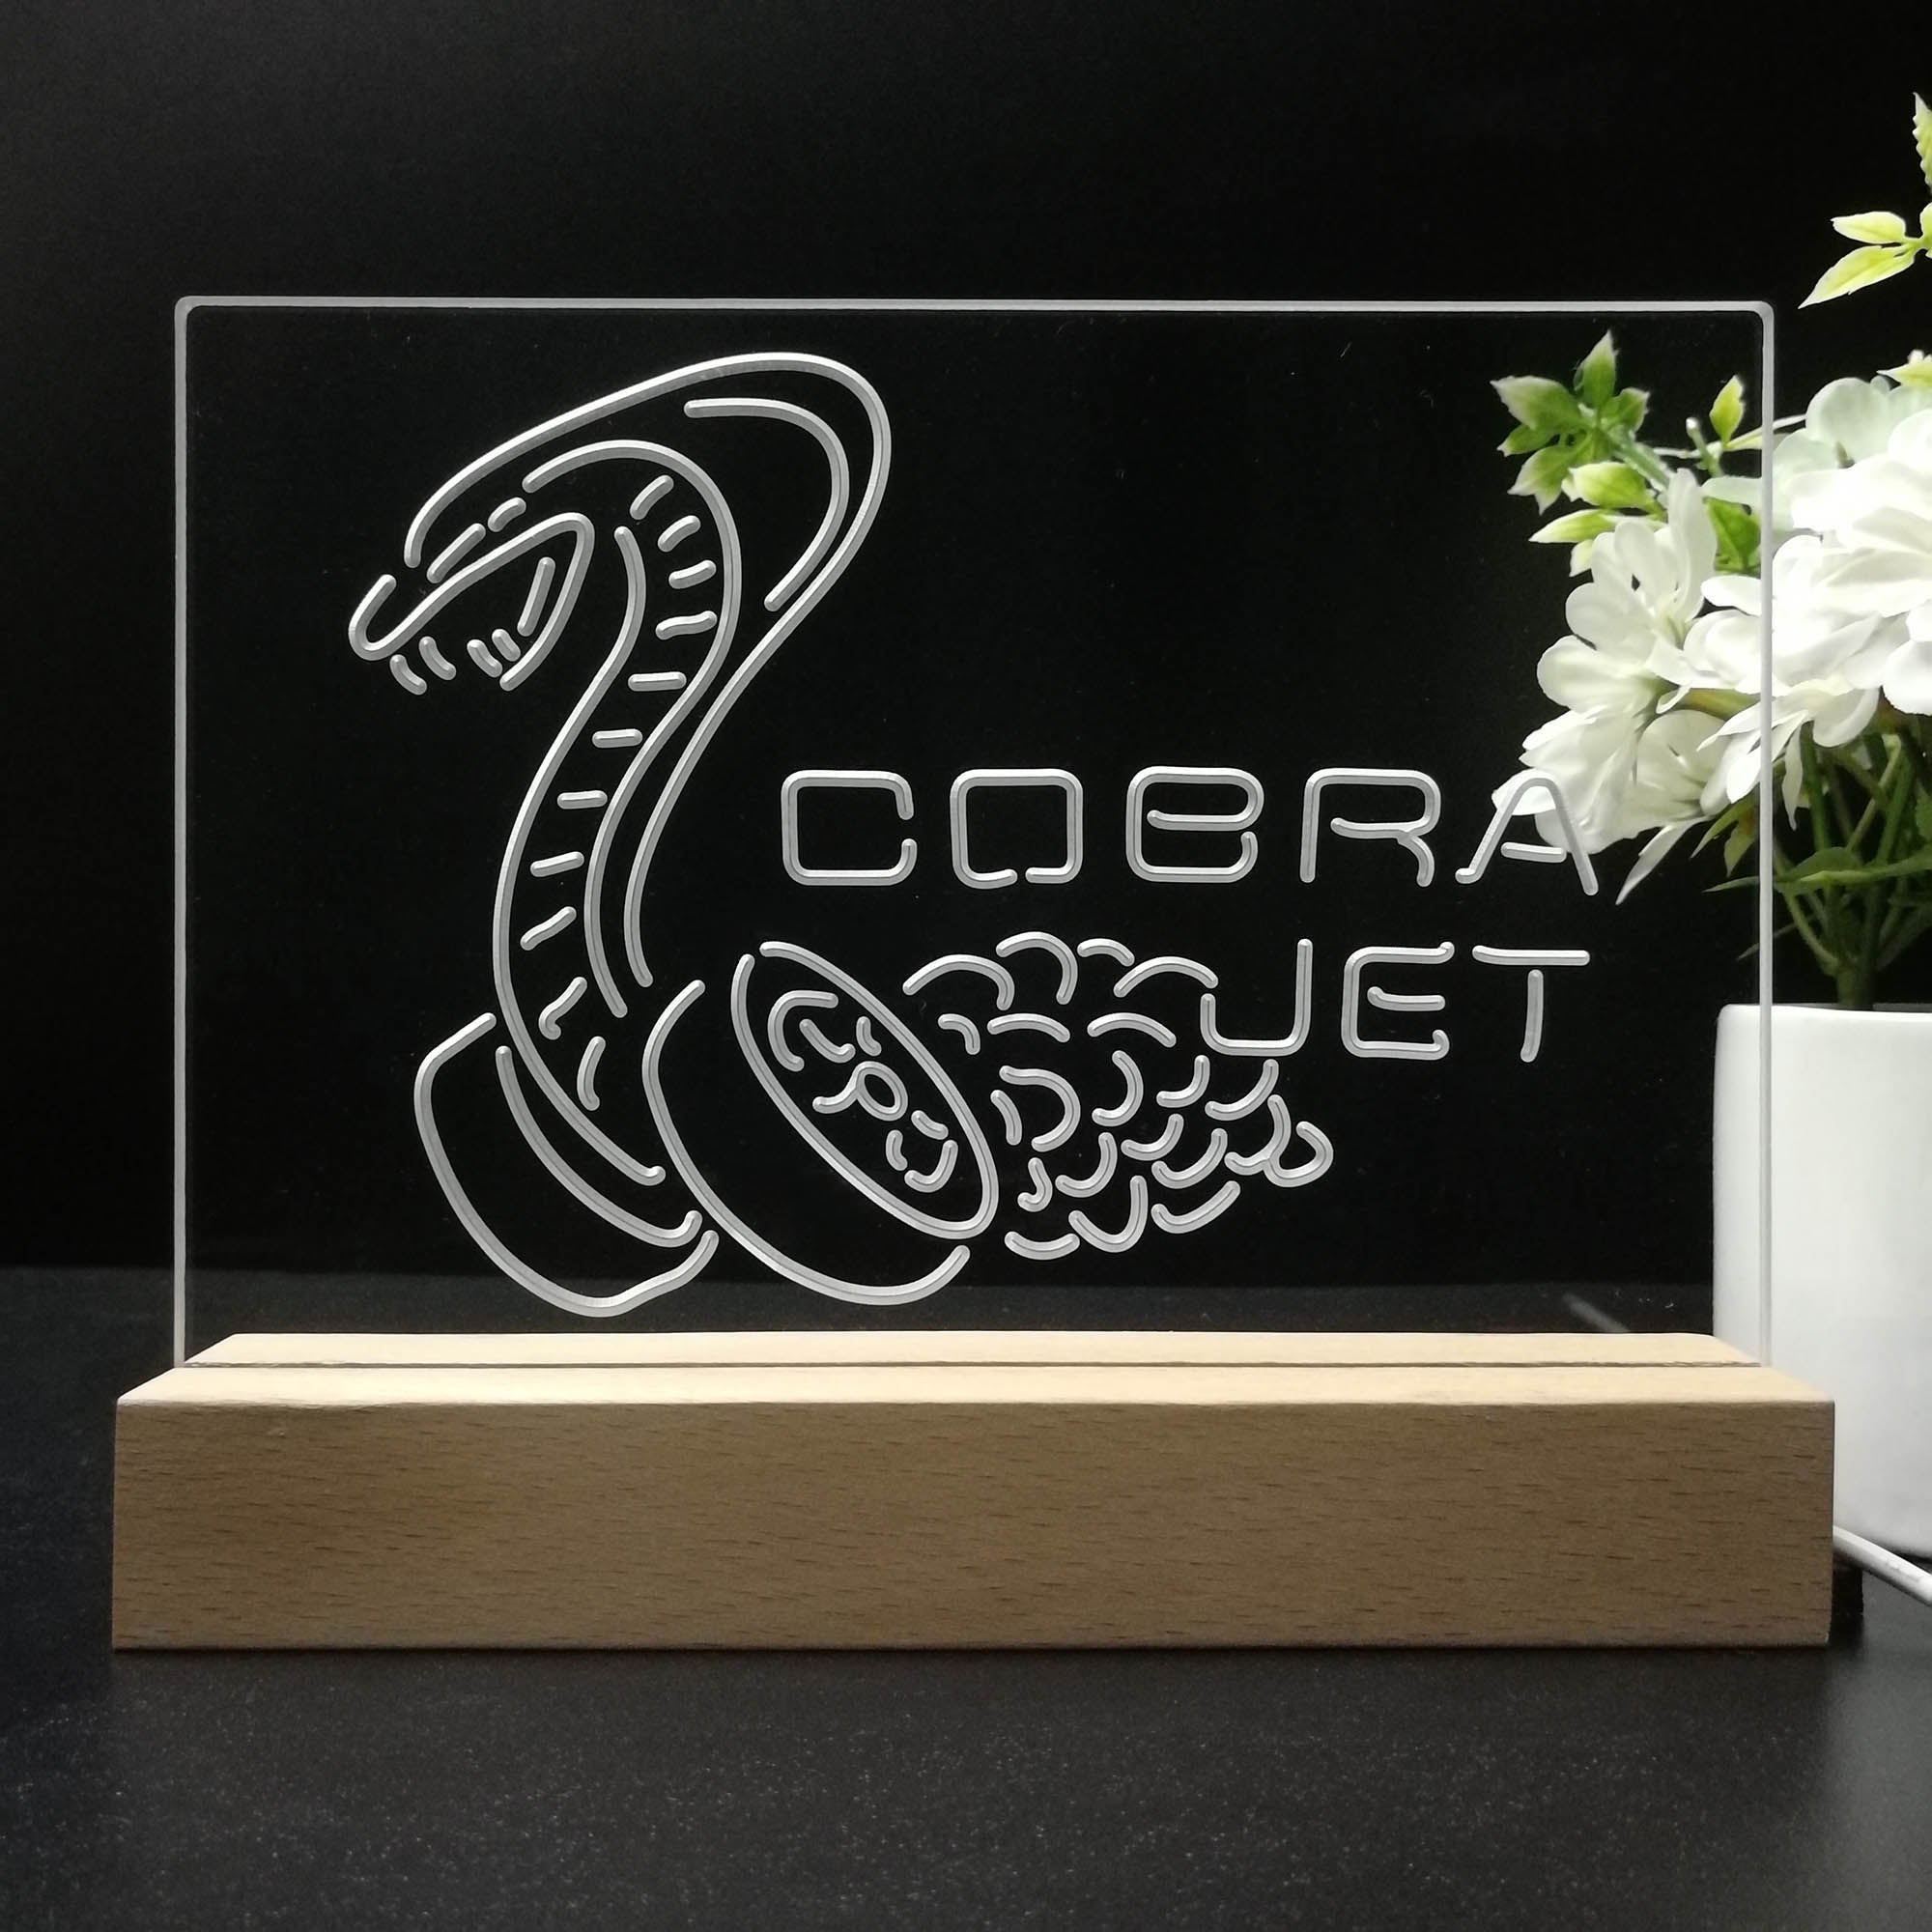 Cobra Jet Car 3D Illusion Night Light Desk Lamp